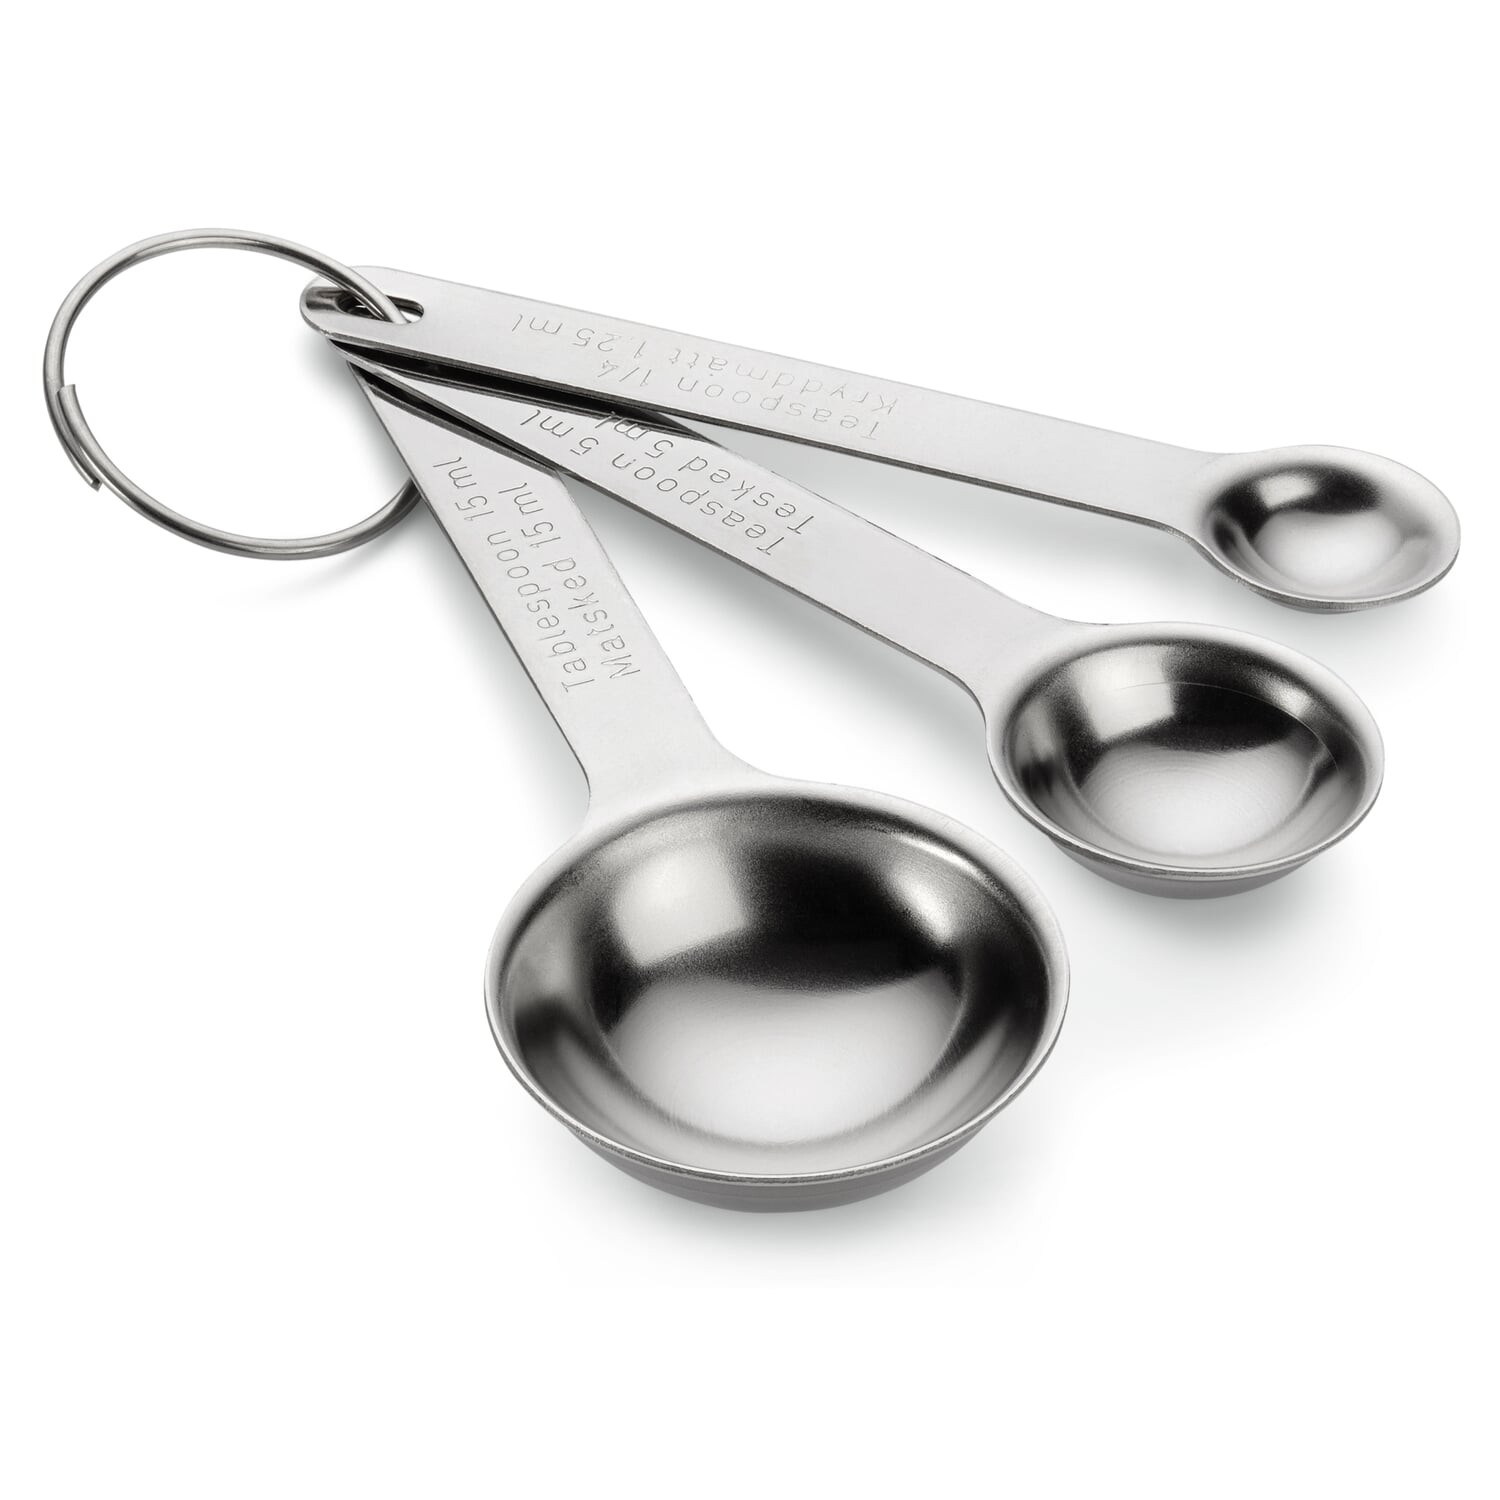 https://assets.manufactum.de/p/066/066908/66908_01.jpg/set-swedish-measuring-spoons.jpg?profile=pdsmain_1500